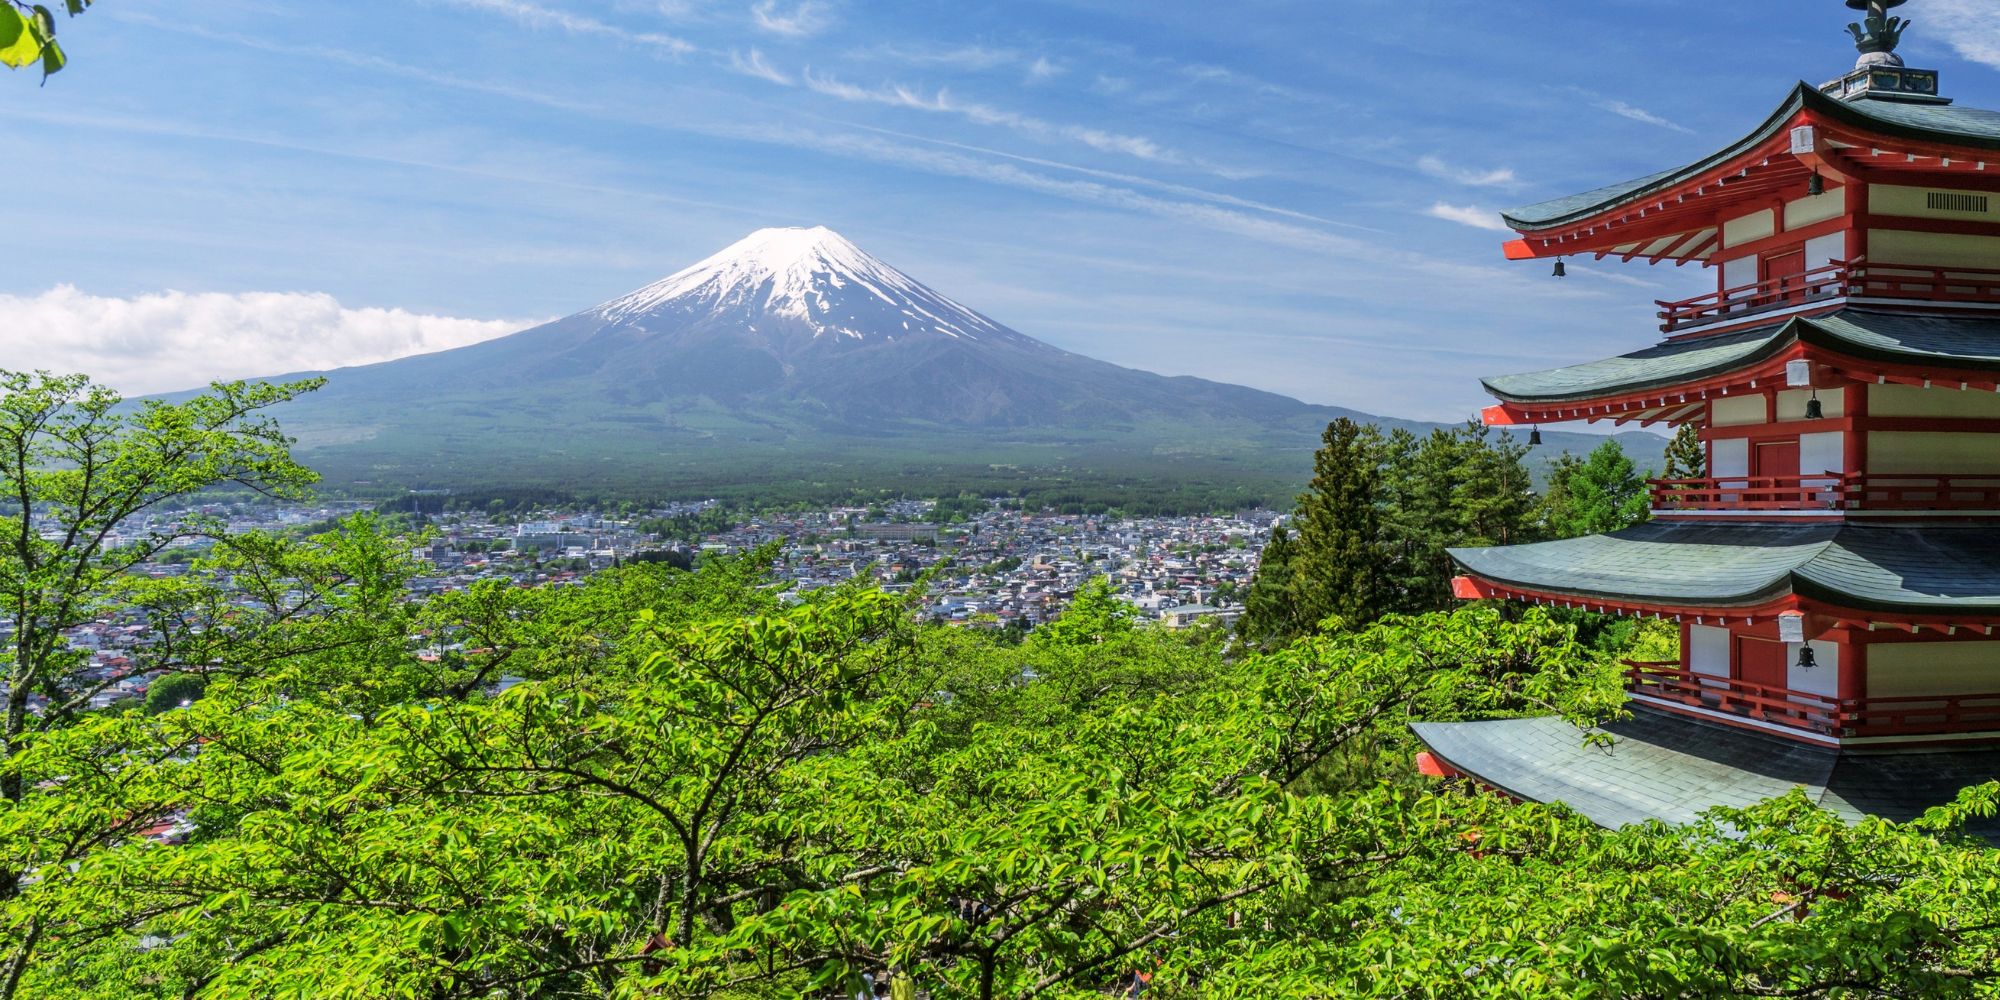 Tips for Preventing Altitude Illness in Mount Fuji